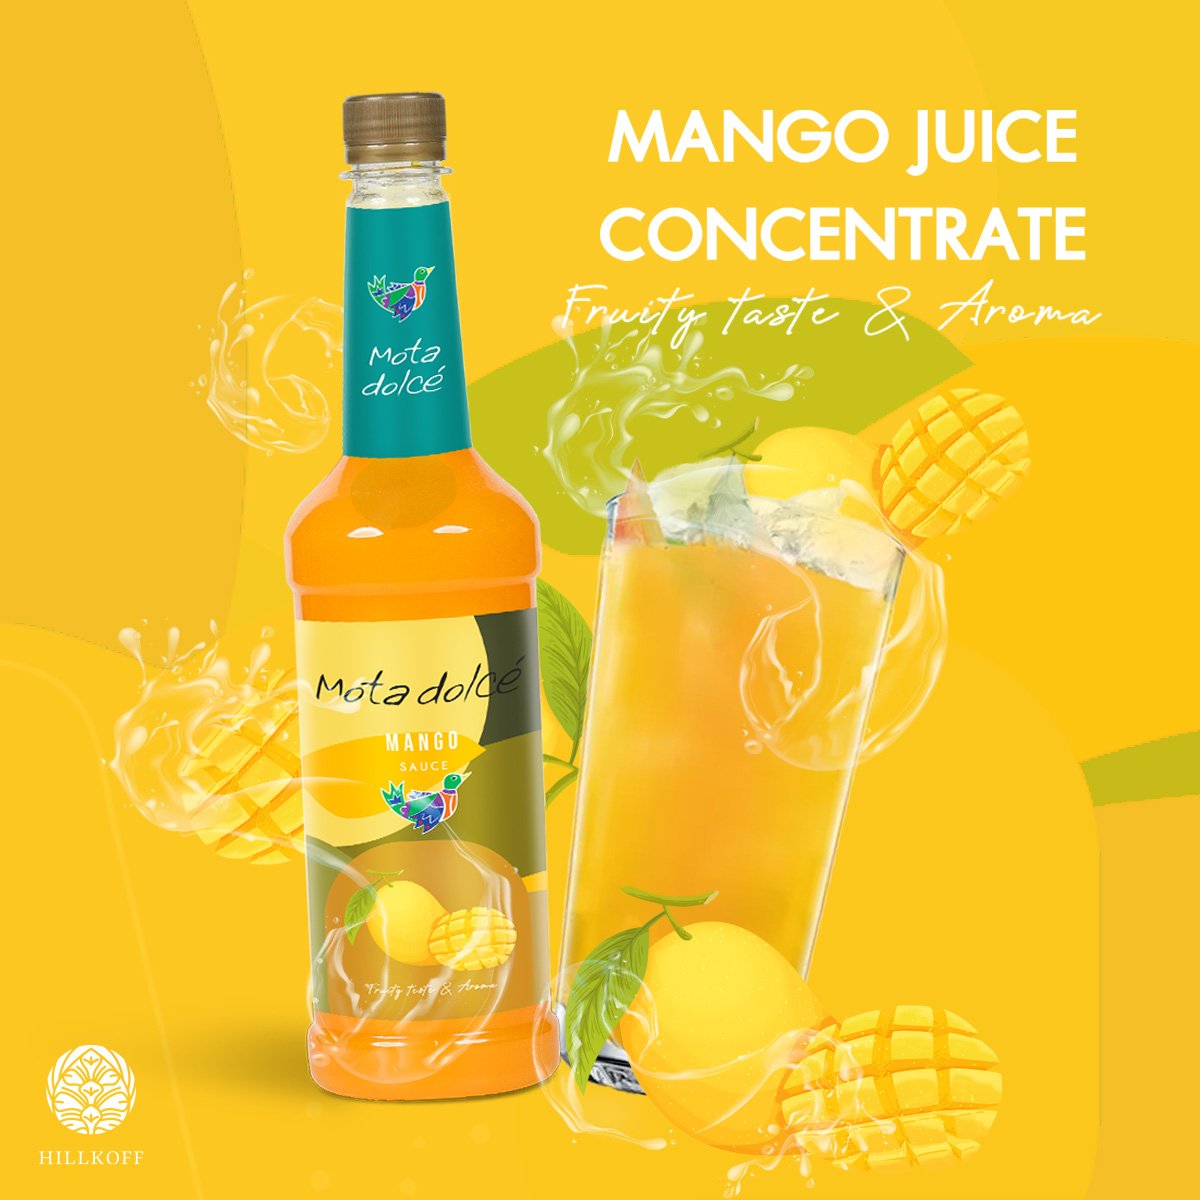 Mota Dolce' Mango : น้ำผลไม้เข้มข้นจากมะม่วง